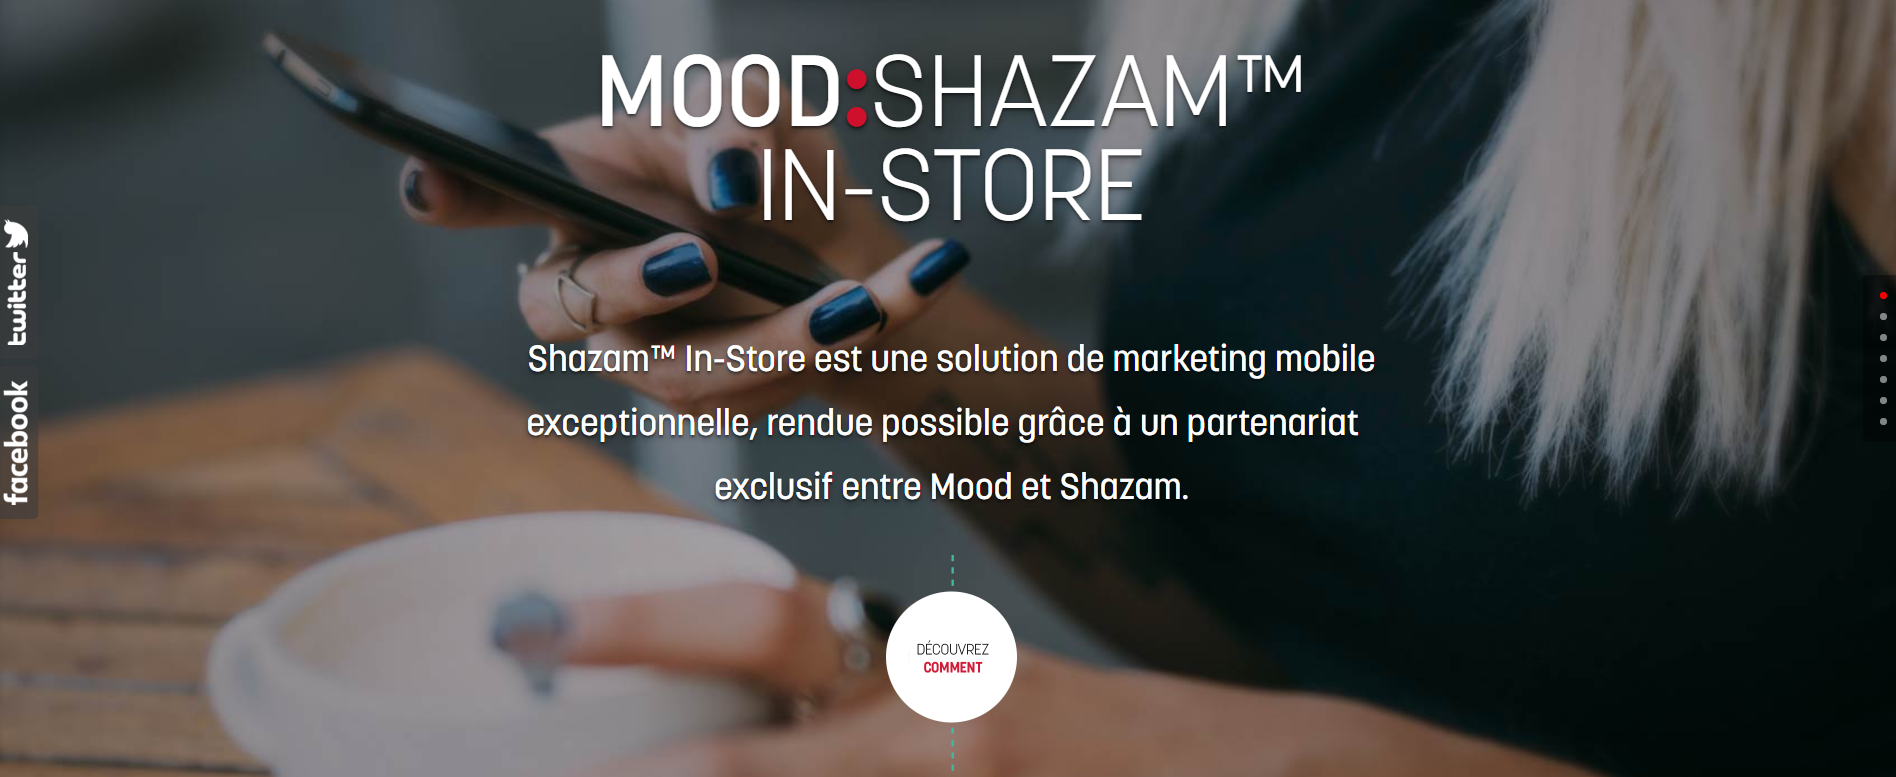 Shazam & Mood Media